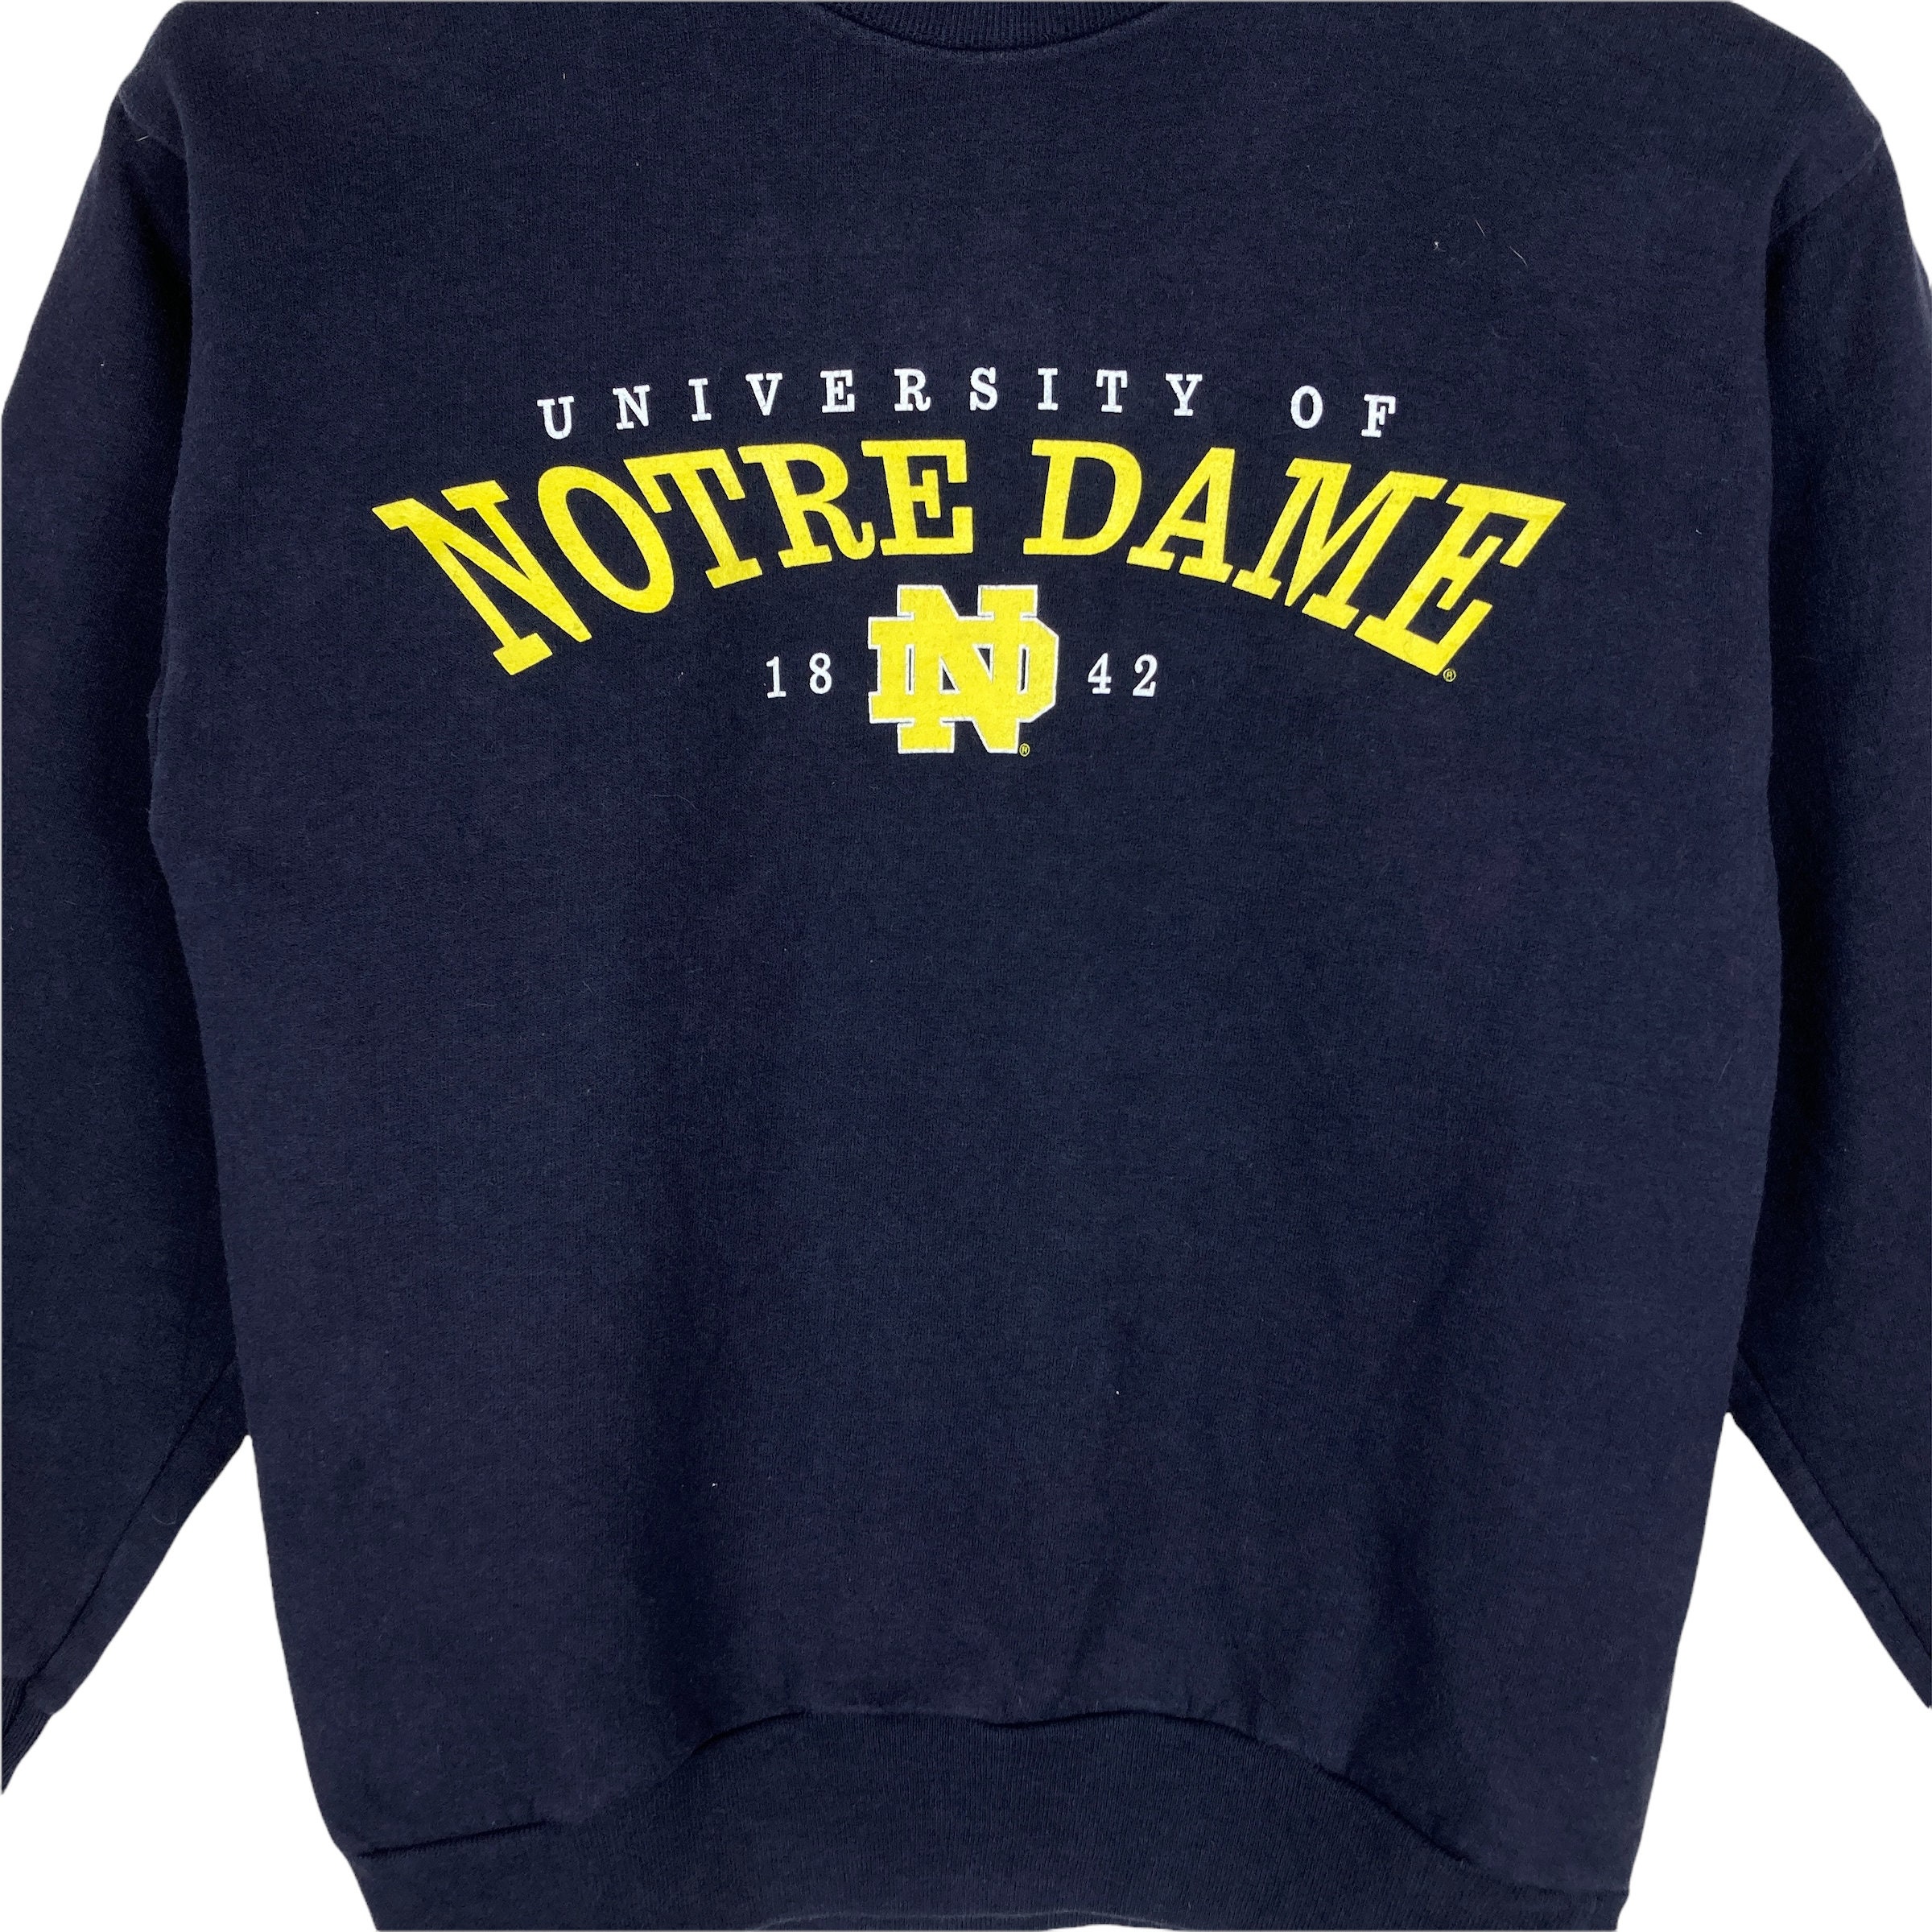 Vintage University Of Notre Dame 1842 Unisex T-Shirt